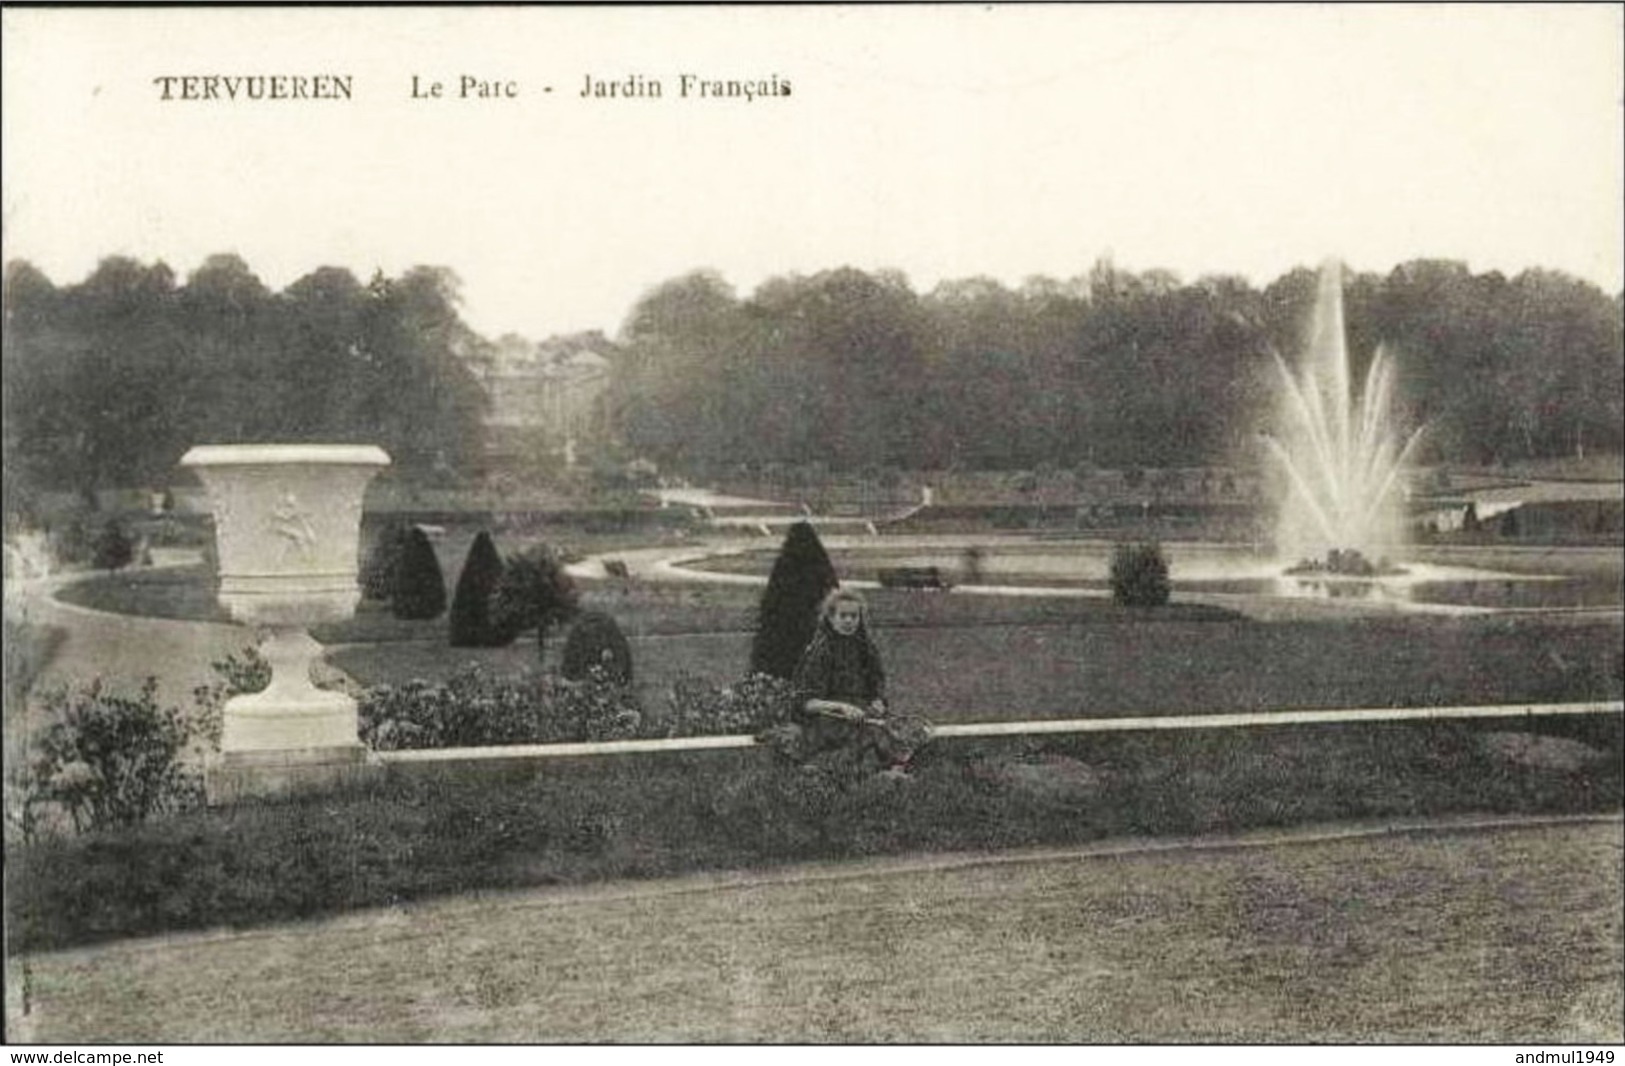 TERVUEREN-TERVUREN - Le Parc - Jardin Français - Edit. : Veuve Decock, Tervueren - Tervuren